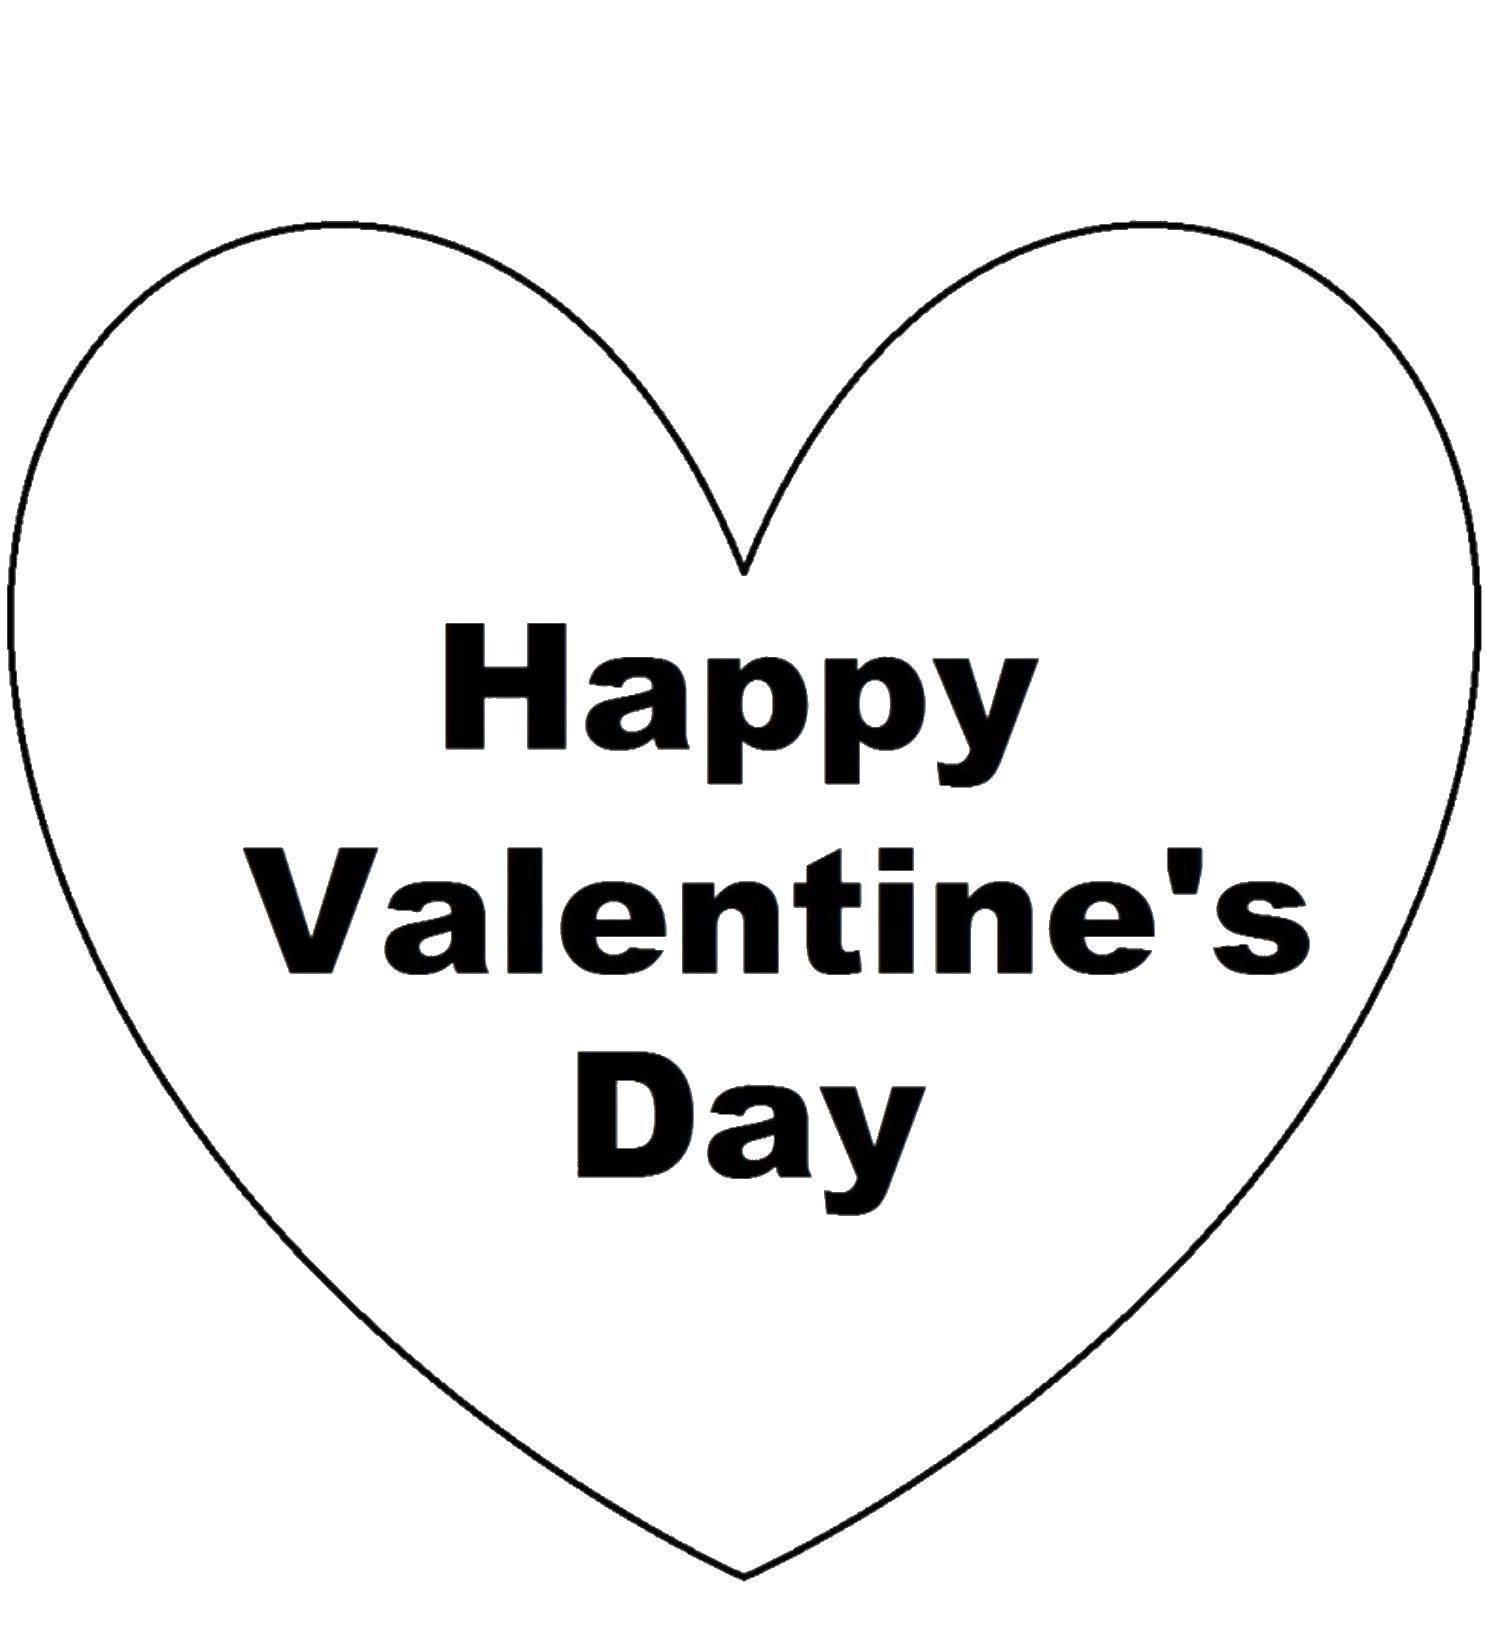 Coloring С днем святого валентина. Category праздник. Tags:  праздник, день Святого Валентина, любовь, сердце.